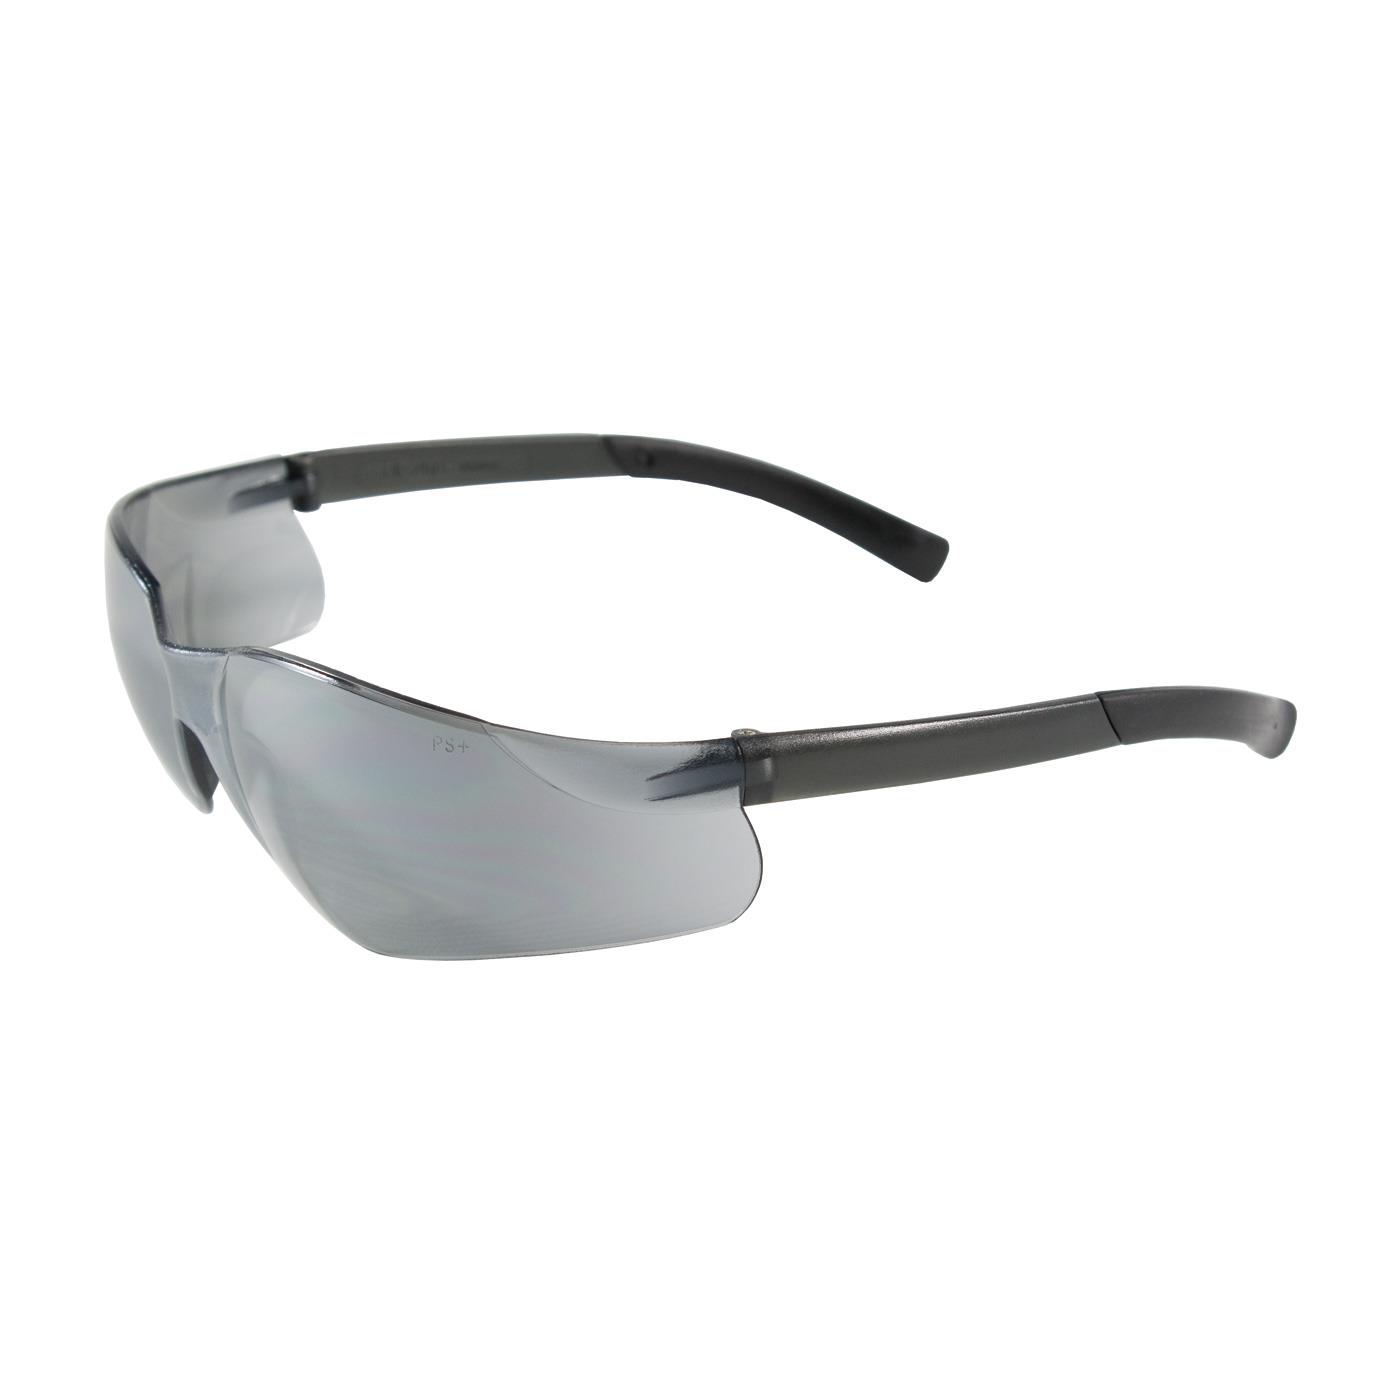 ZENON Z14SN SILVER MIRROR LENS - Safety Glasses